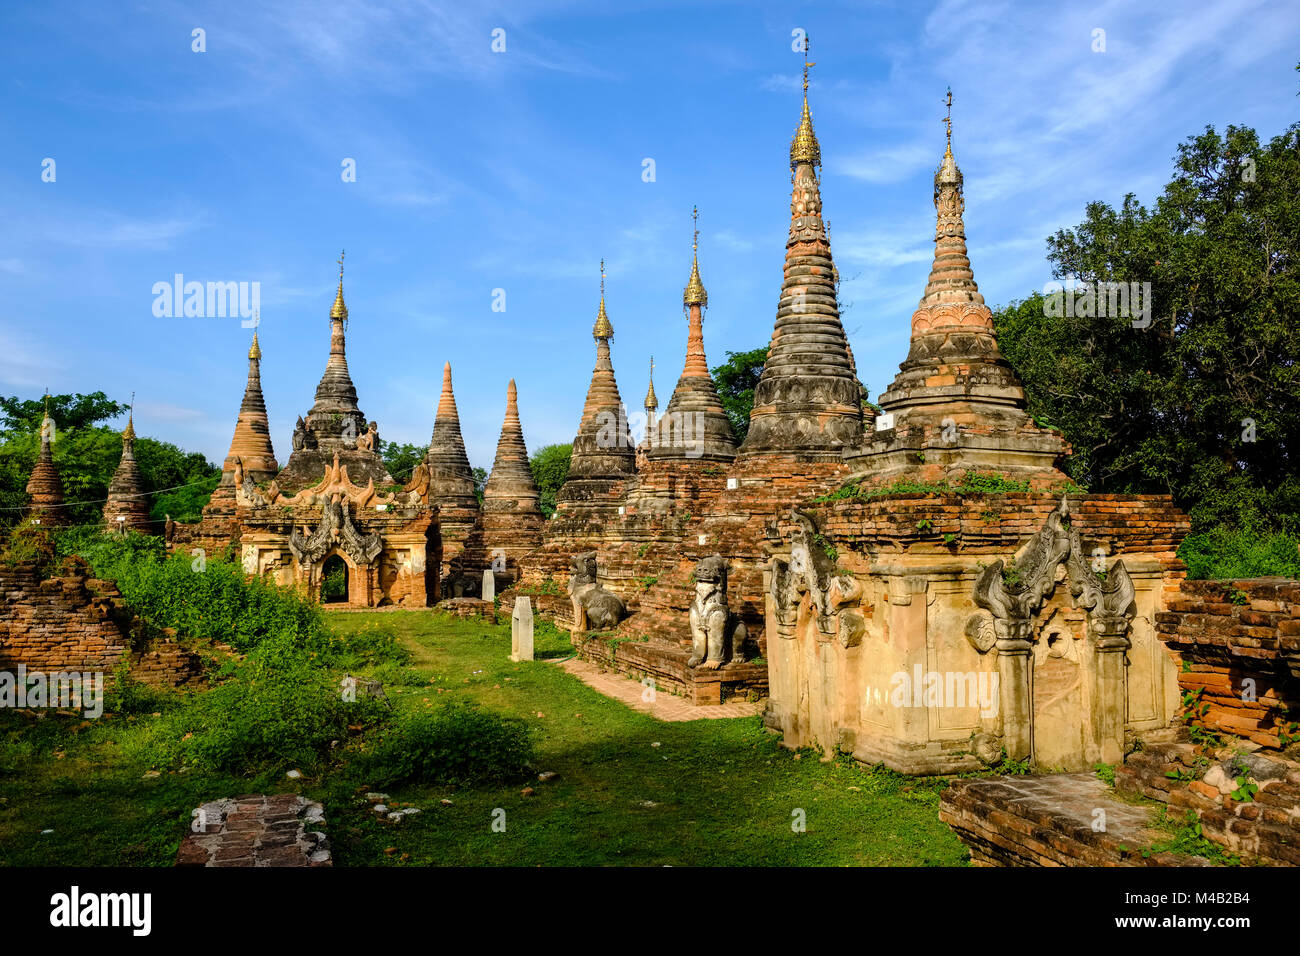 Les pagodes en brique de la Daw Pagoda Gyan dans complexe Inwa, ancienne capitale de la Birmanie Banque D'Images